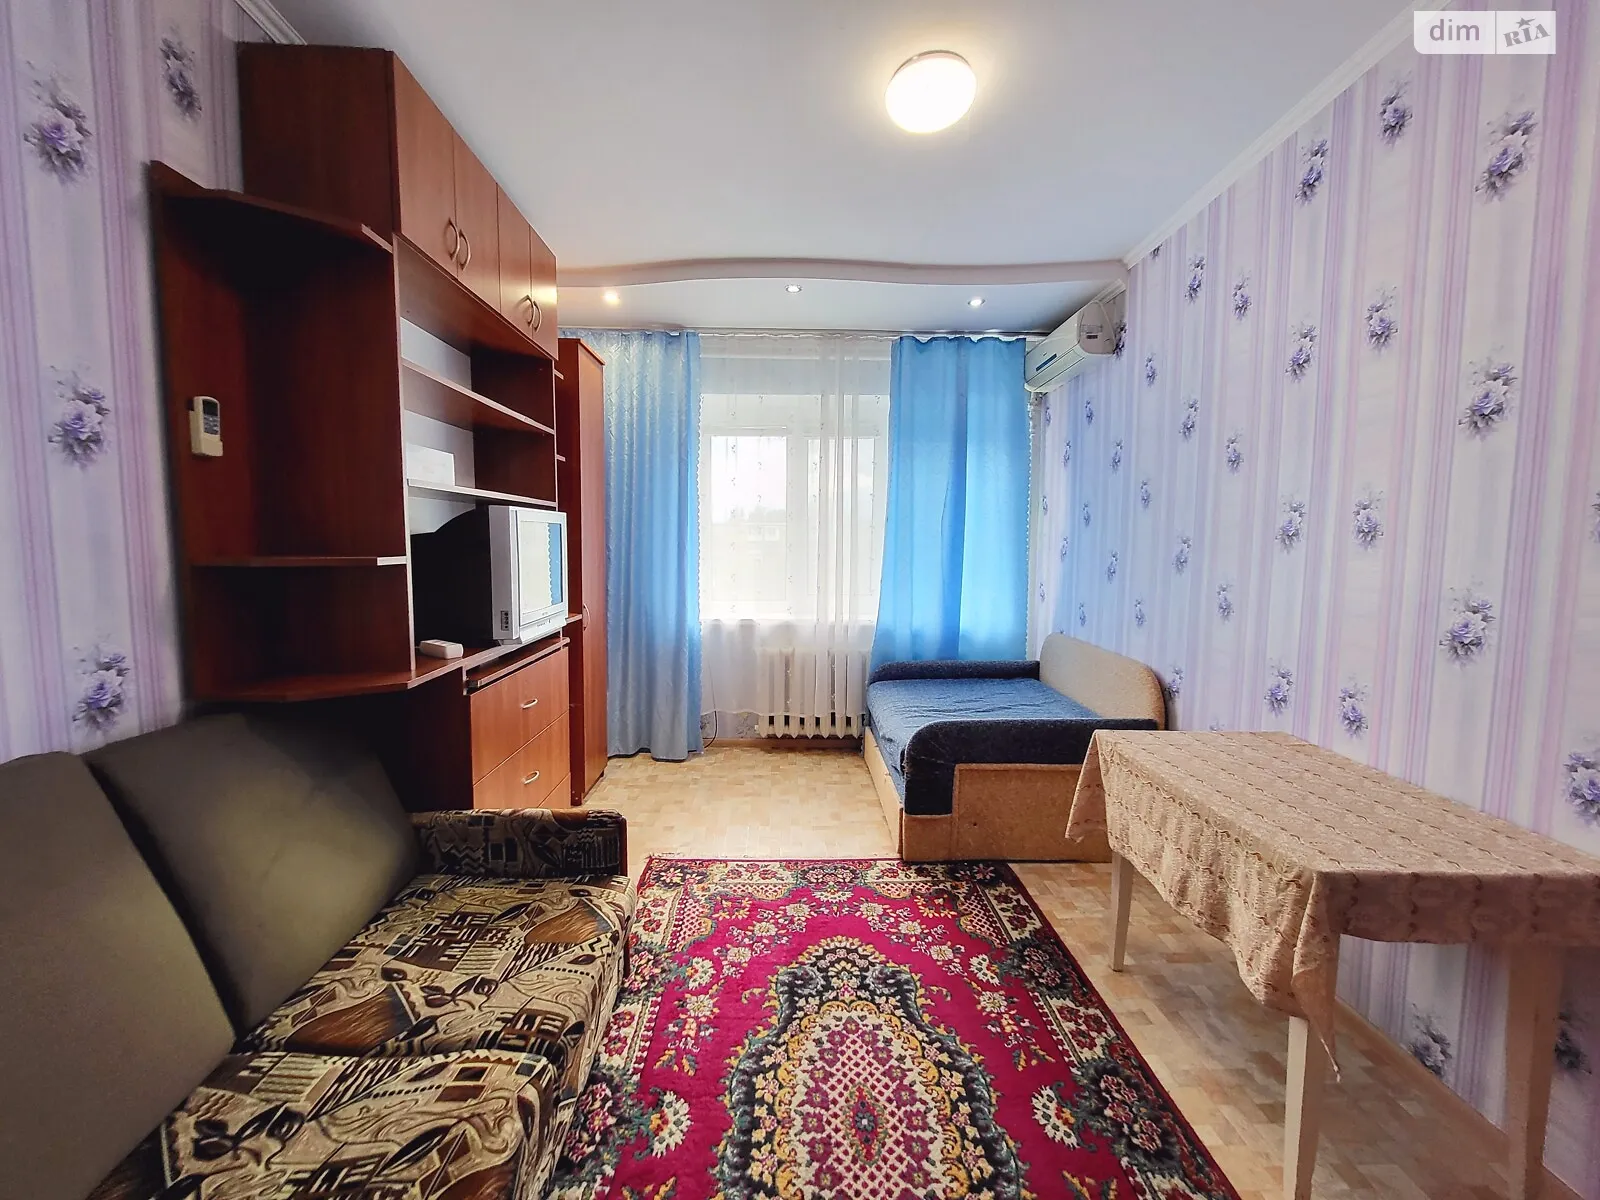 Продается комната 17 кв. м в Виннице, цена: 12000 $ - фото 1